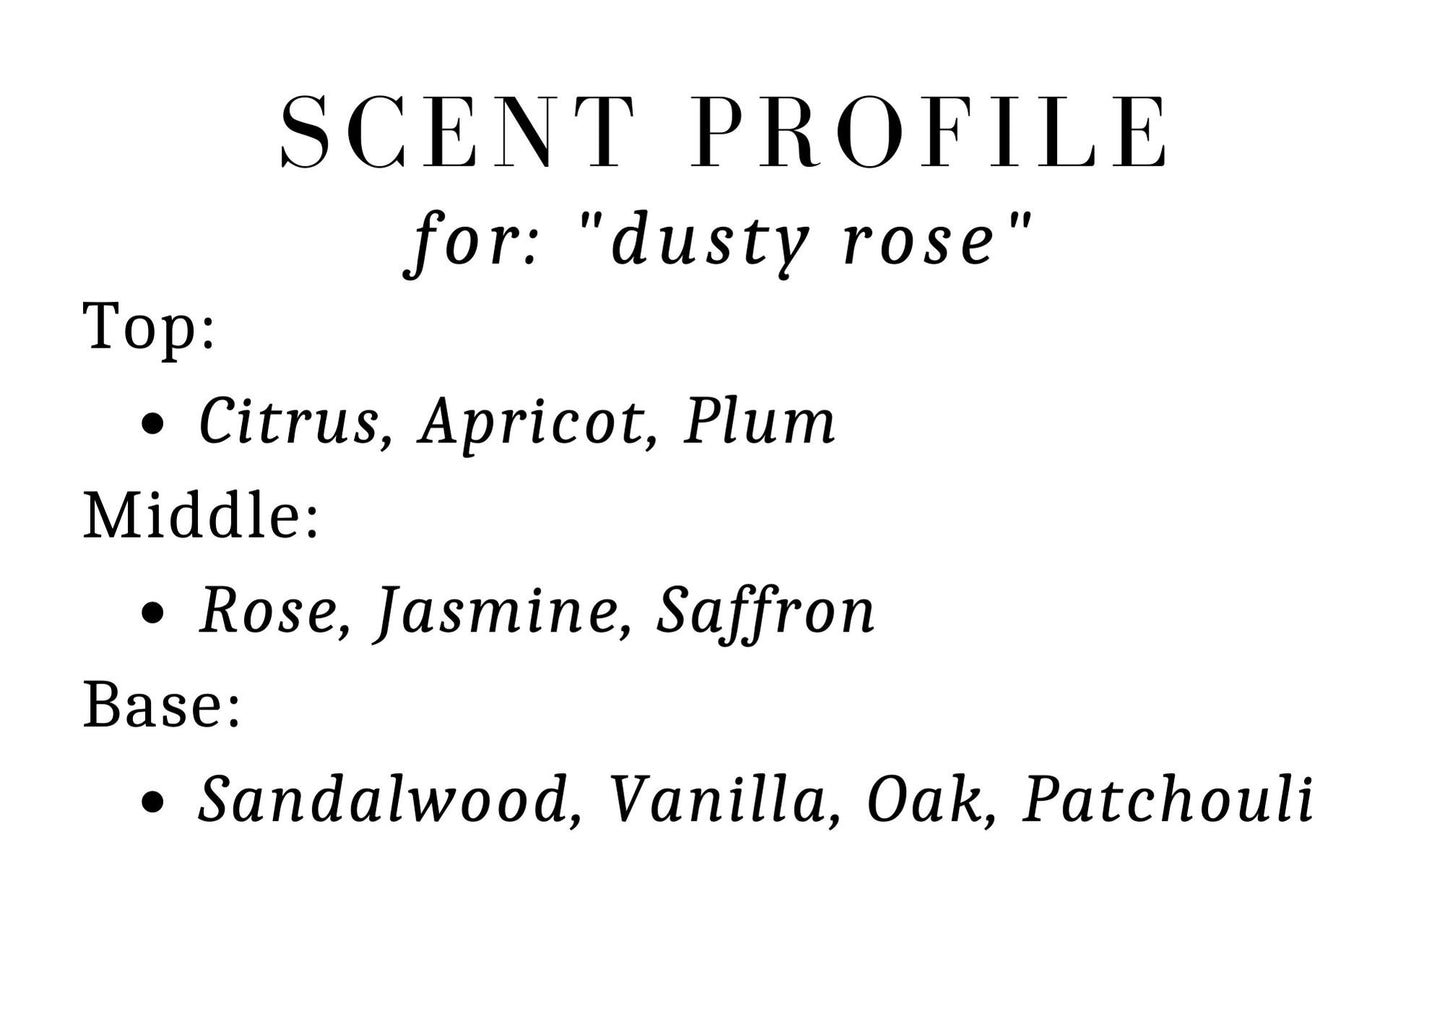 This is an image of the scent profile for "dusty rose." Top: citrus, apricot, plum. Middle: rose, jasmine, saffron. Base: sandalwood, vanilla, oak, patchouli. 